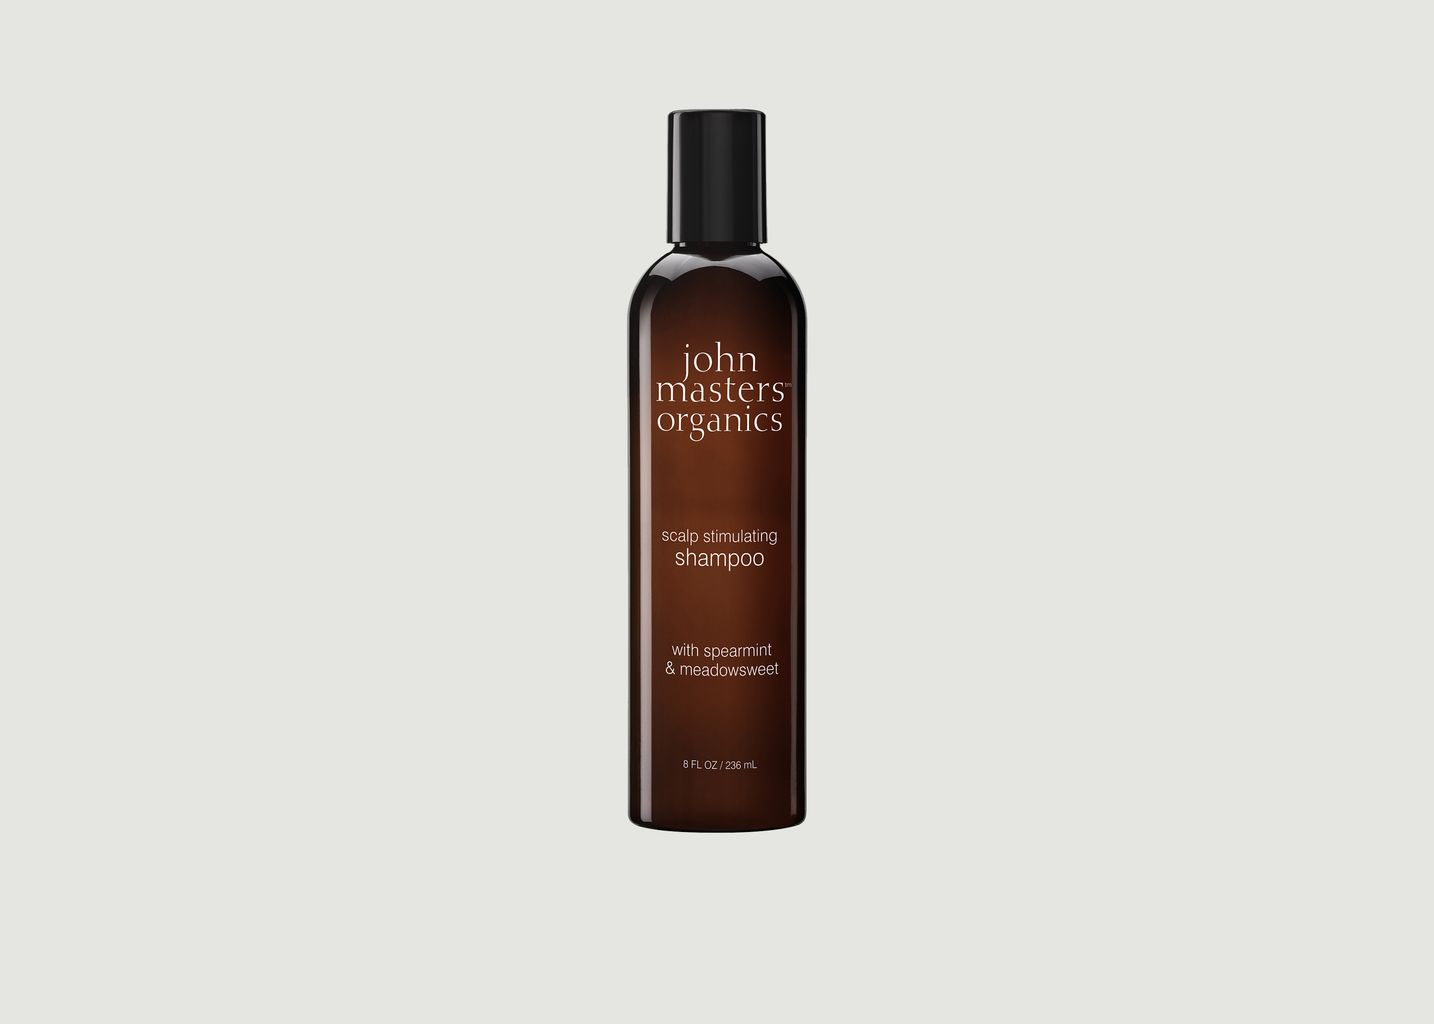 Stimulating shampoo for the scalp - John Masters Organics